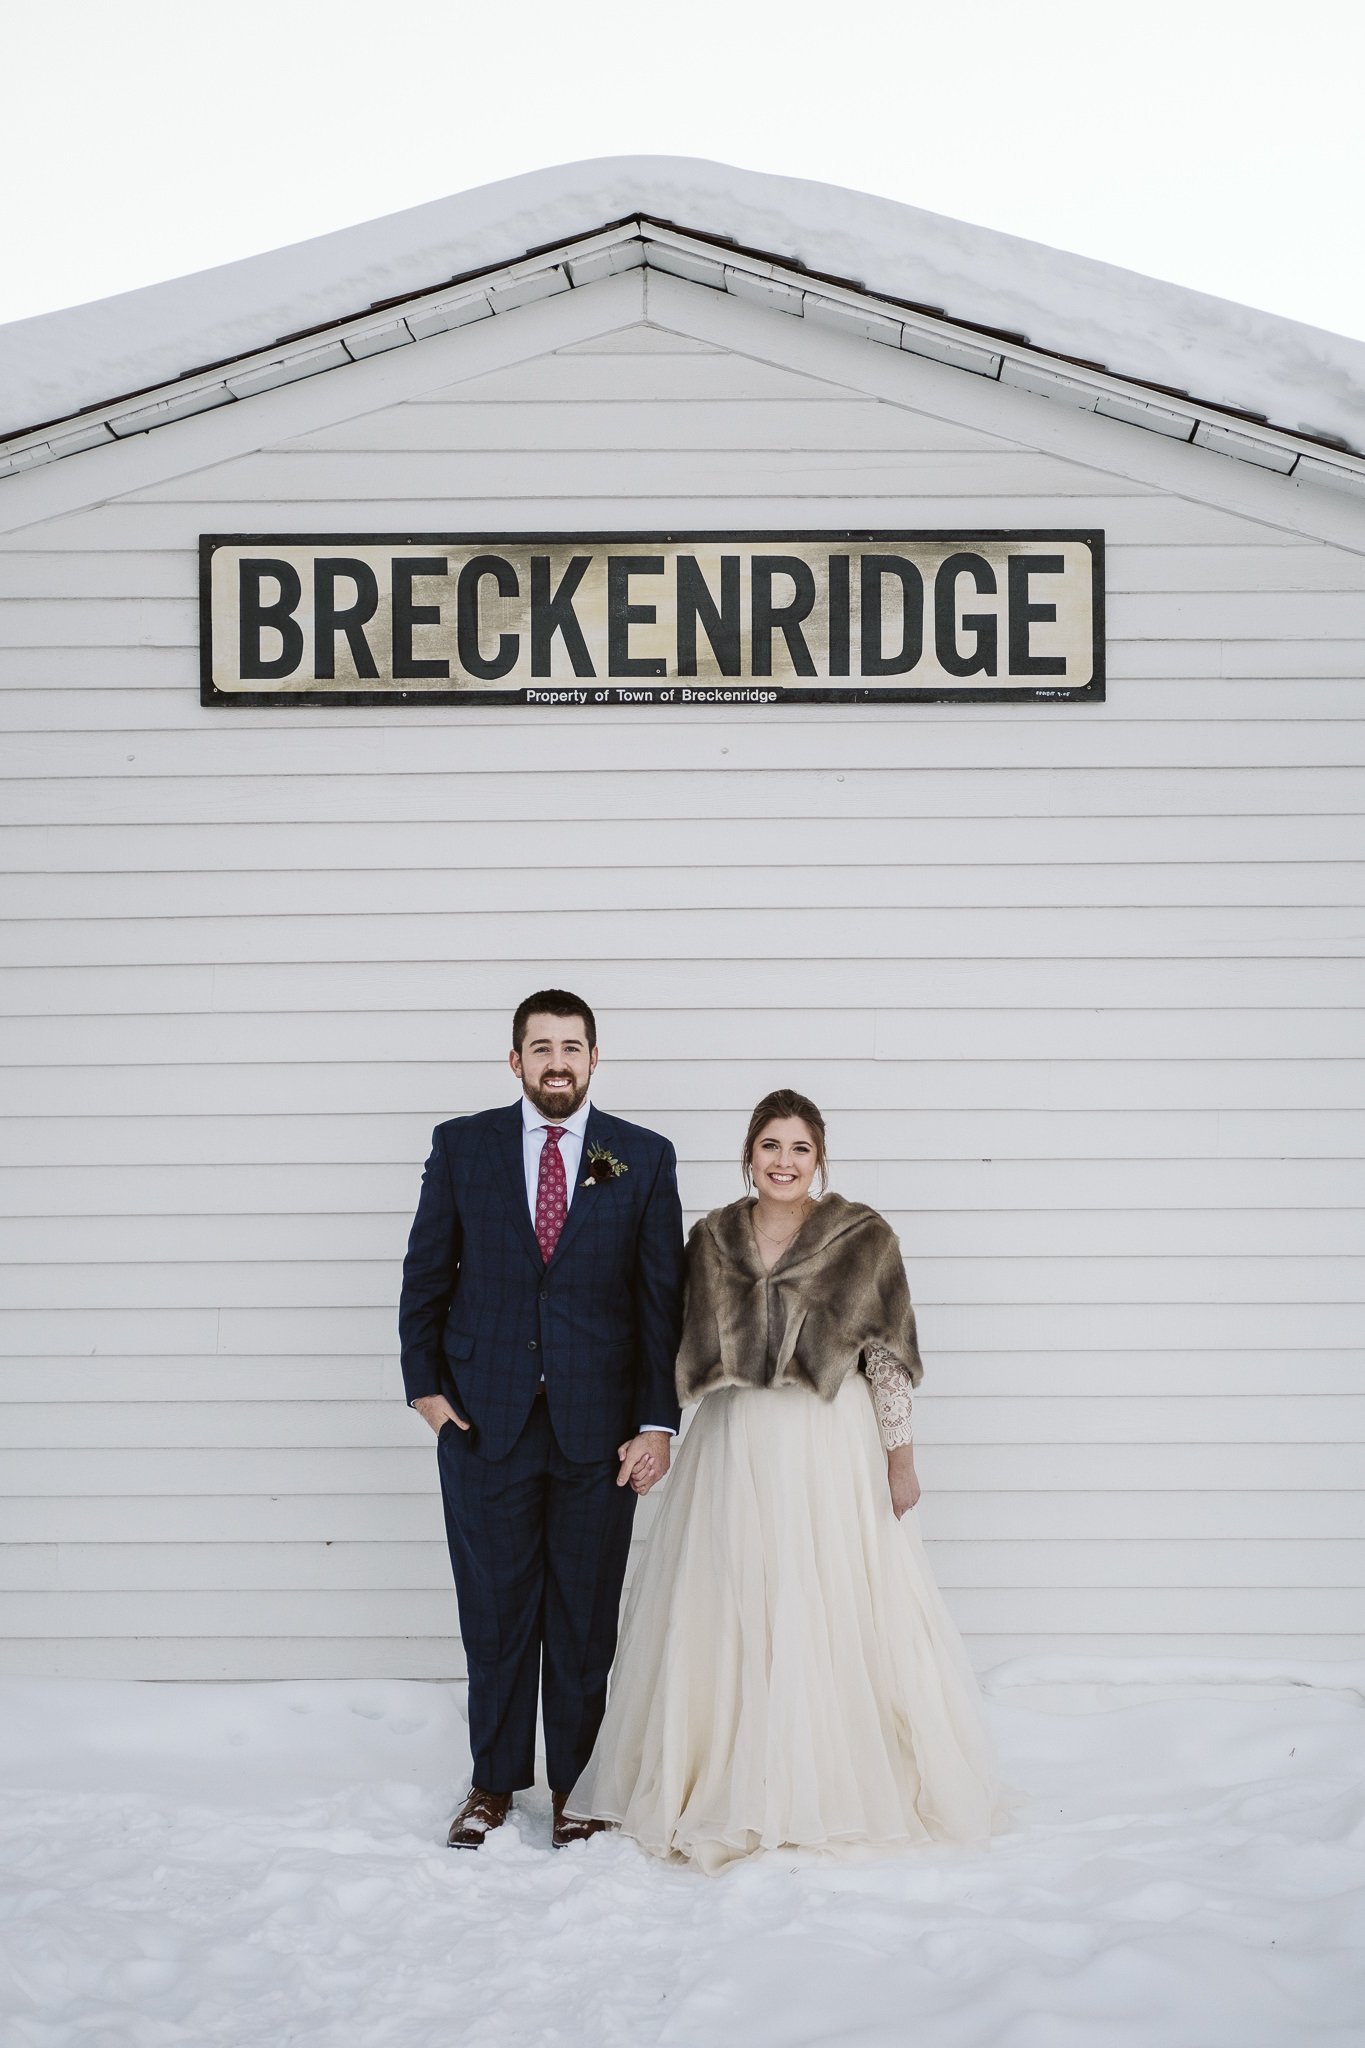 Breckenridge winter wedding photos.